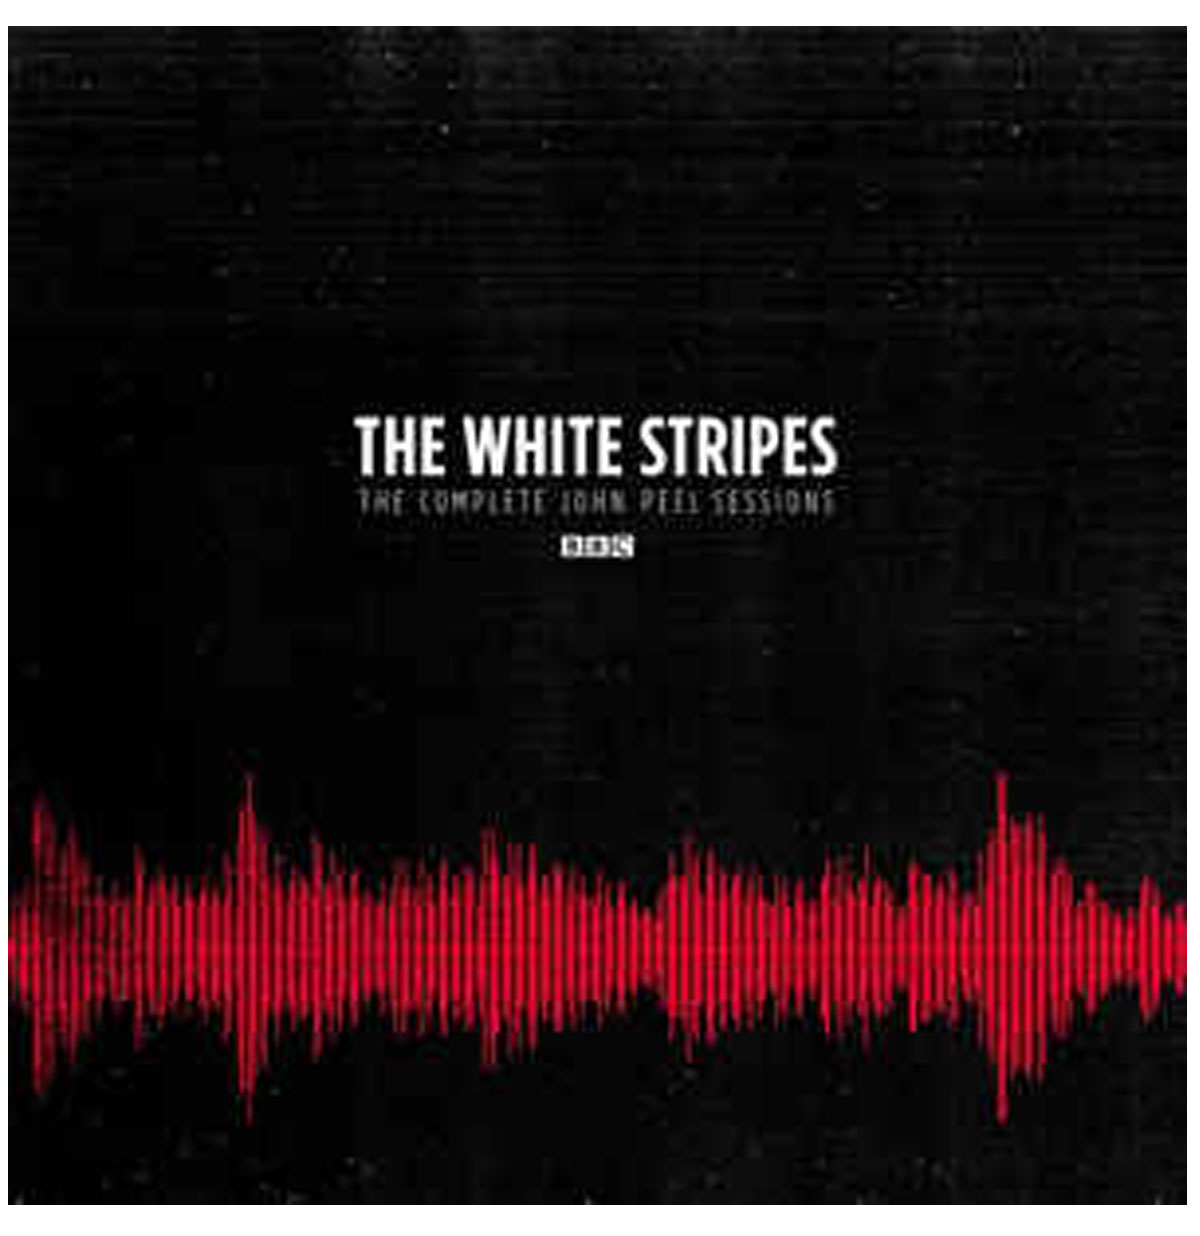 The White Stripes - The Complete John Peel Sessions 2-LP